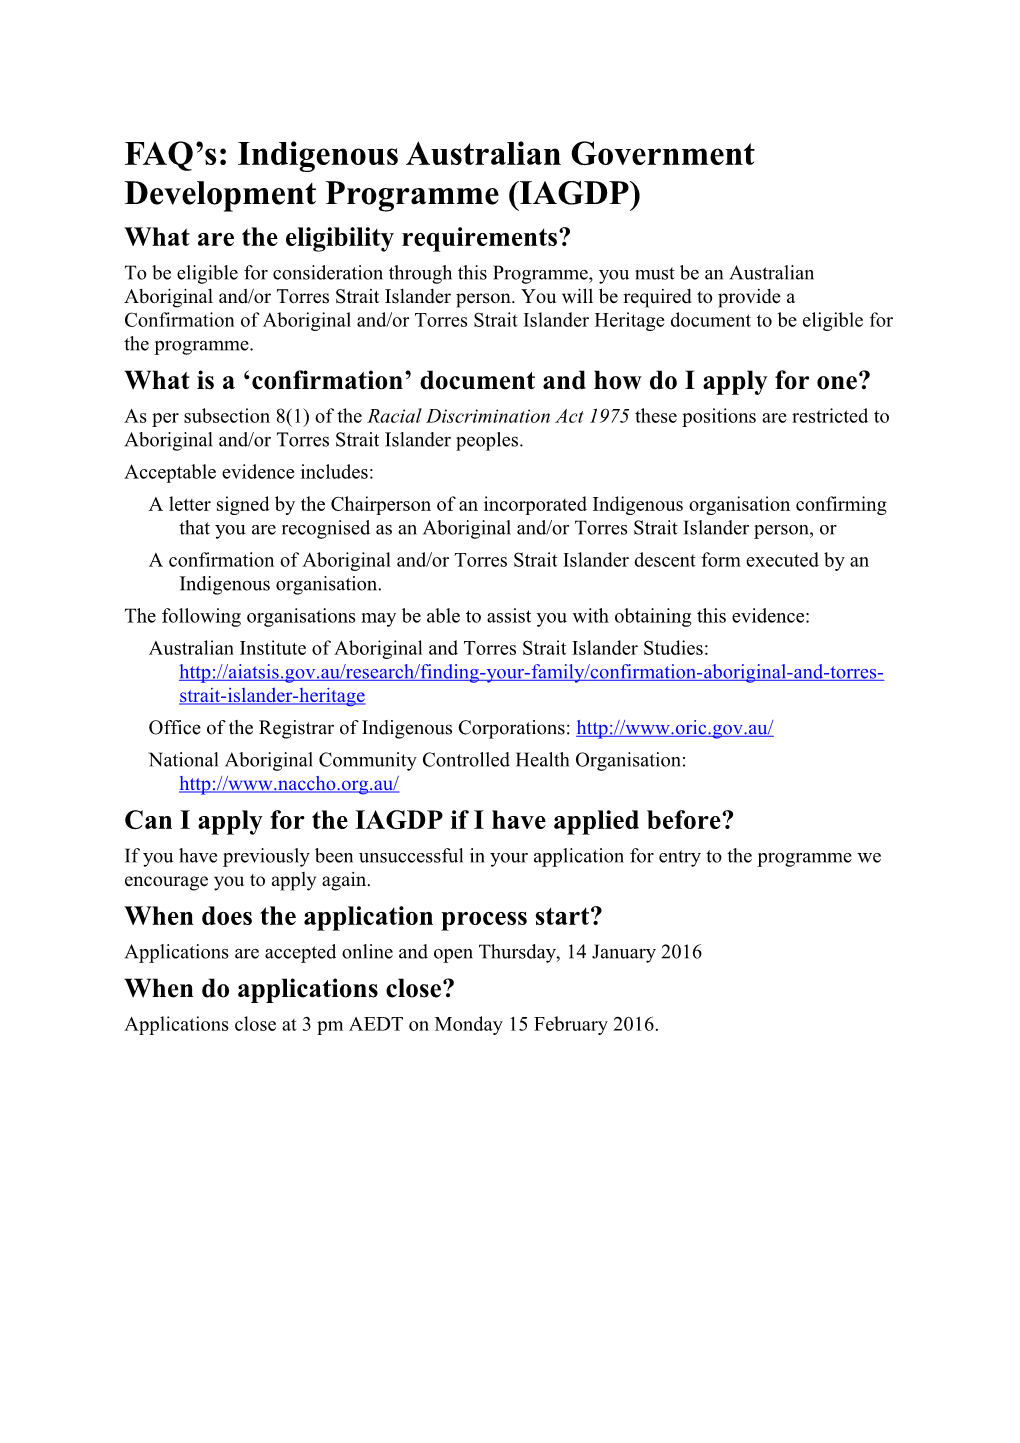 FAQ S: Indigenous Australian Government Development Programme (IAGDP)